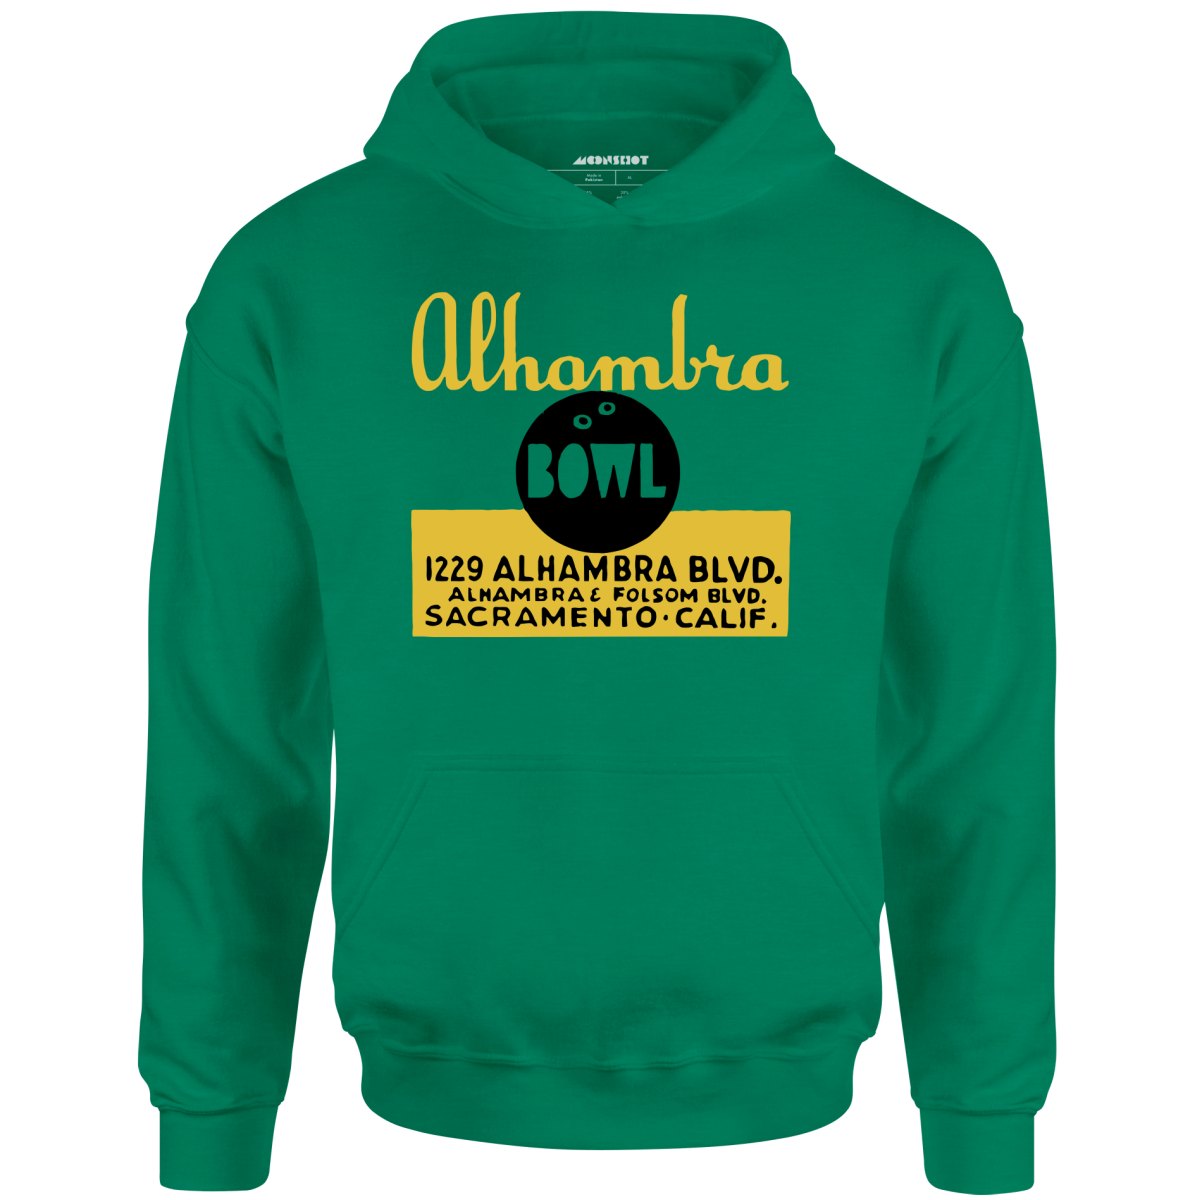 Alhambra Bowl - Sacramento, CA - Vintage Bowling Alley - Unisex Hoodie